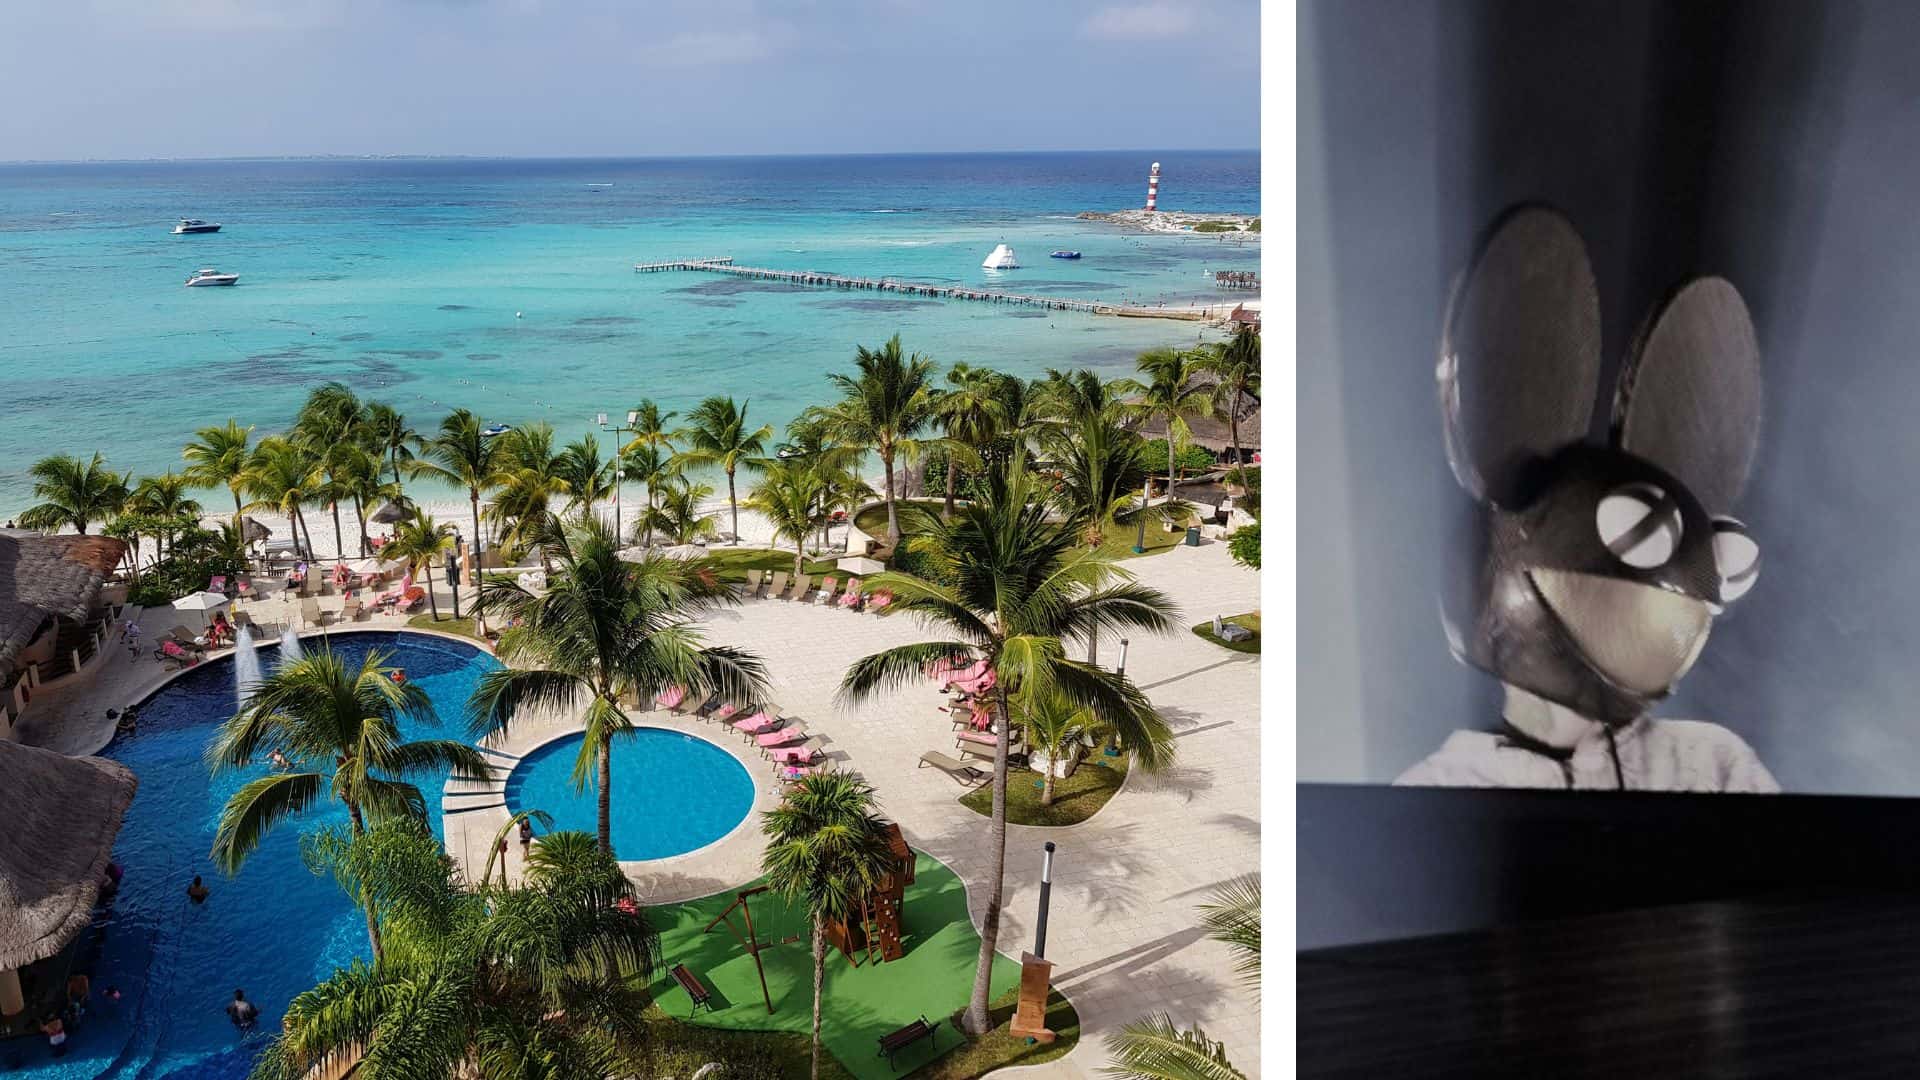 deadmau5 announces ‘We Are Friends’ all inclusive resort event in Cancun